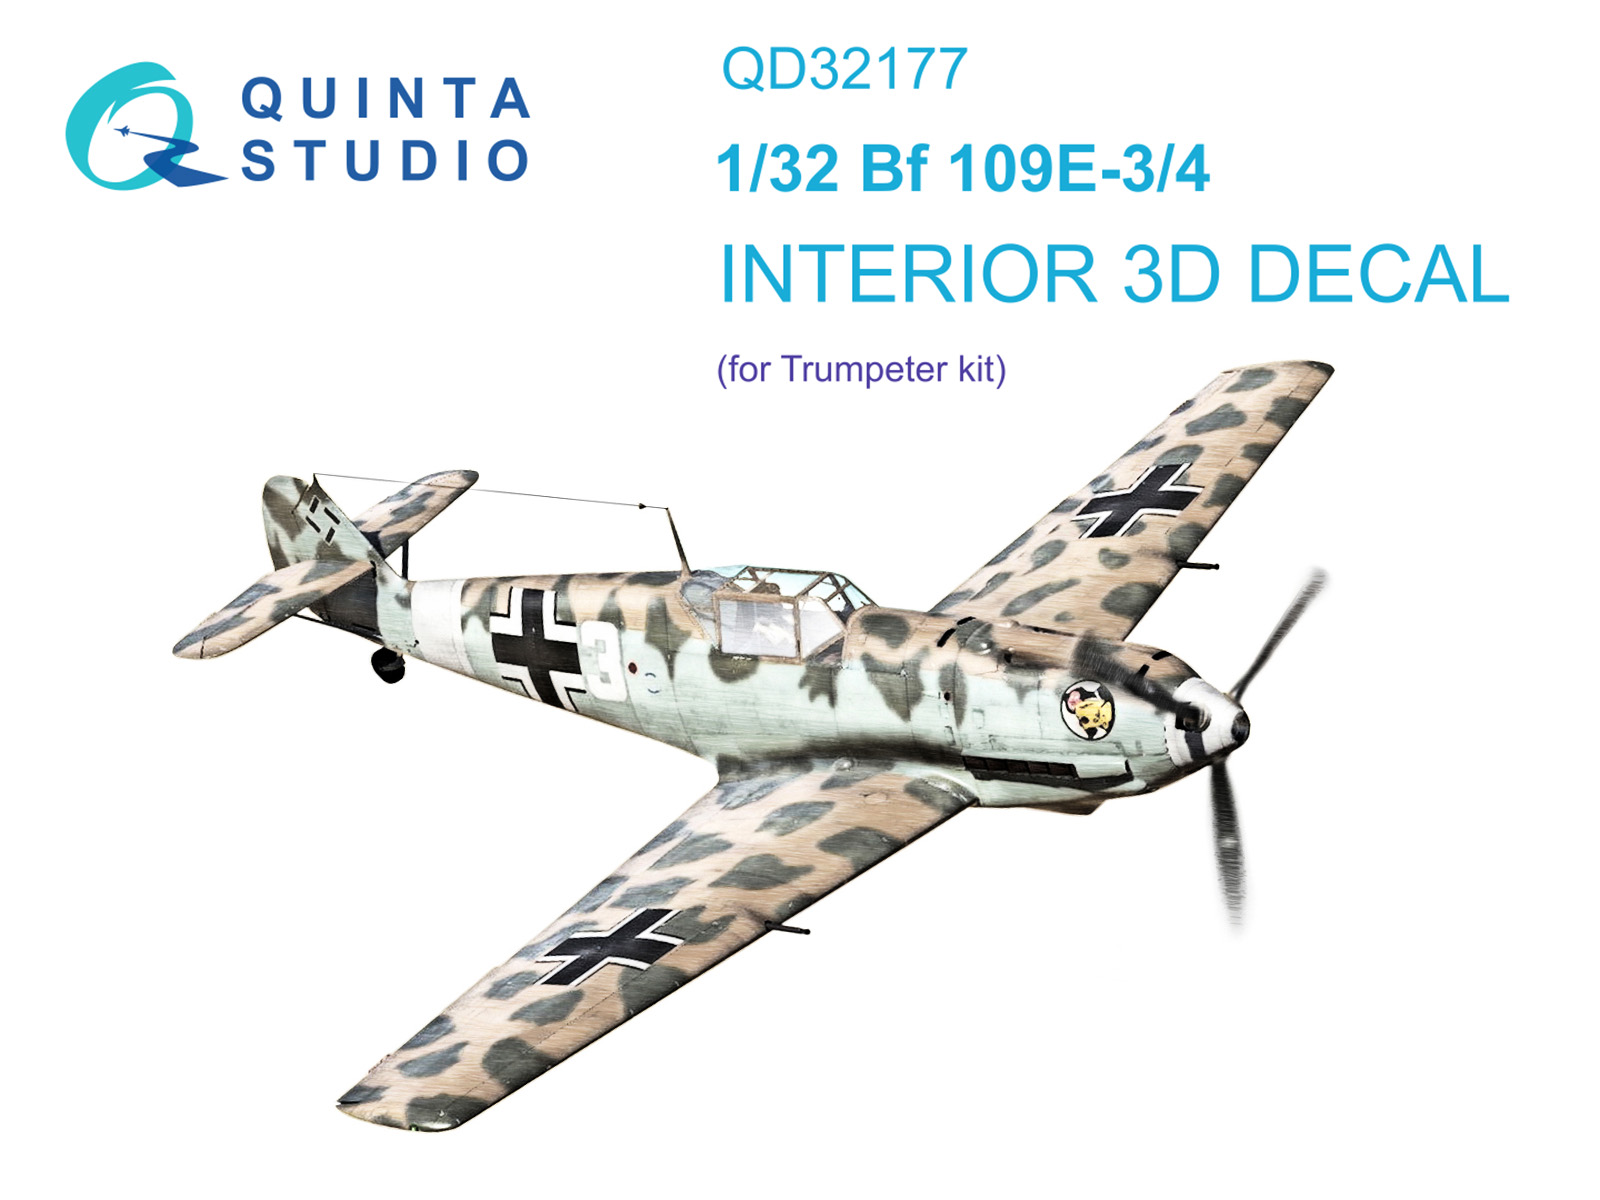 QD32177  декали  3D Декаль интерьера кабины Bf 109E3/4 (Trump)  (1:32)